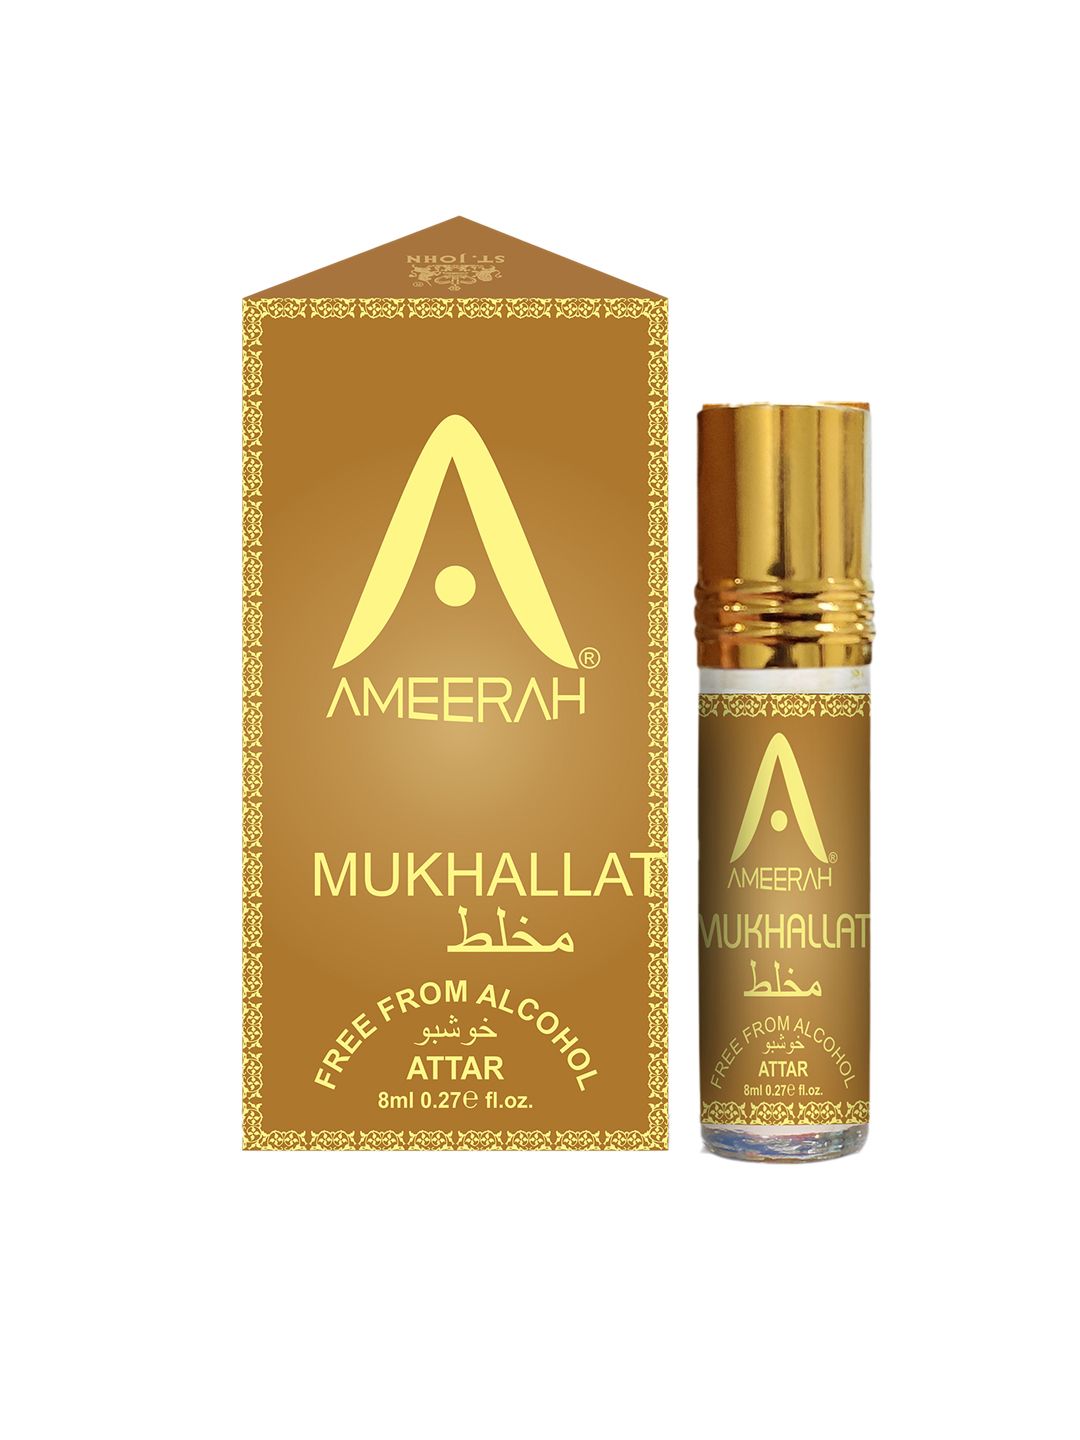 St. John Ameerah Mukhallat Attar - 8 ml Price in India